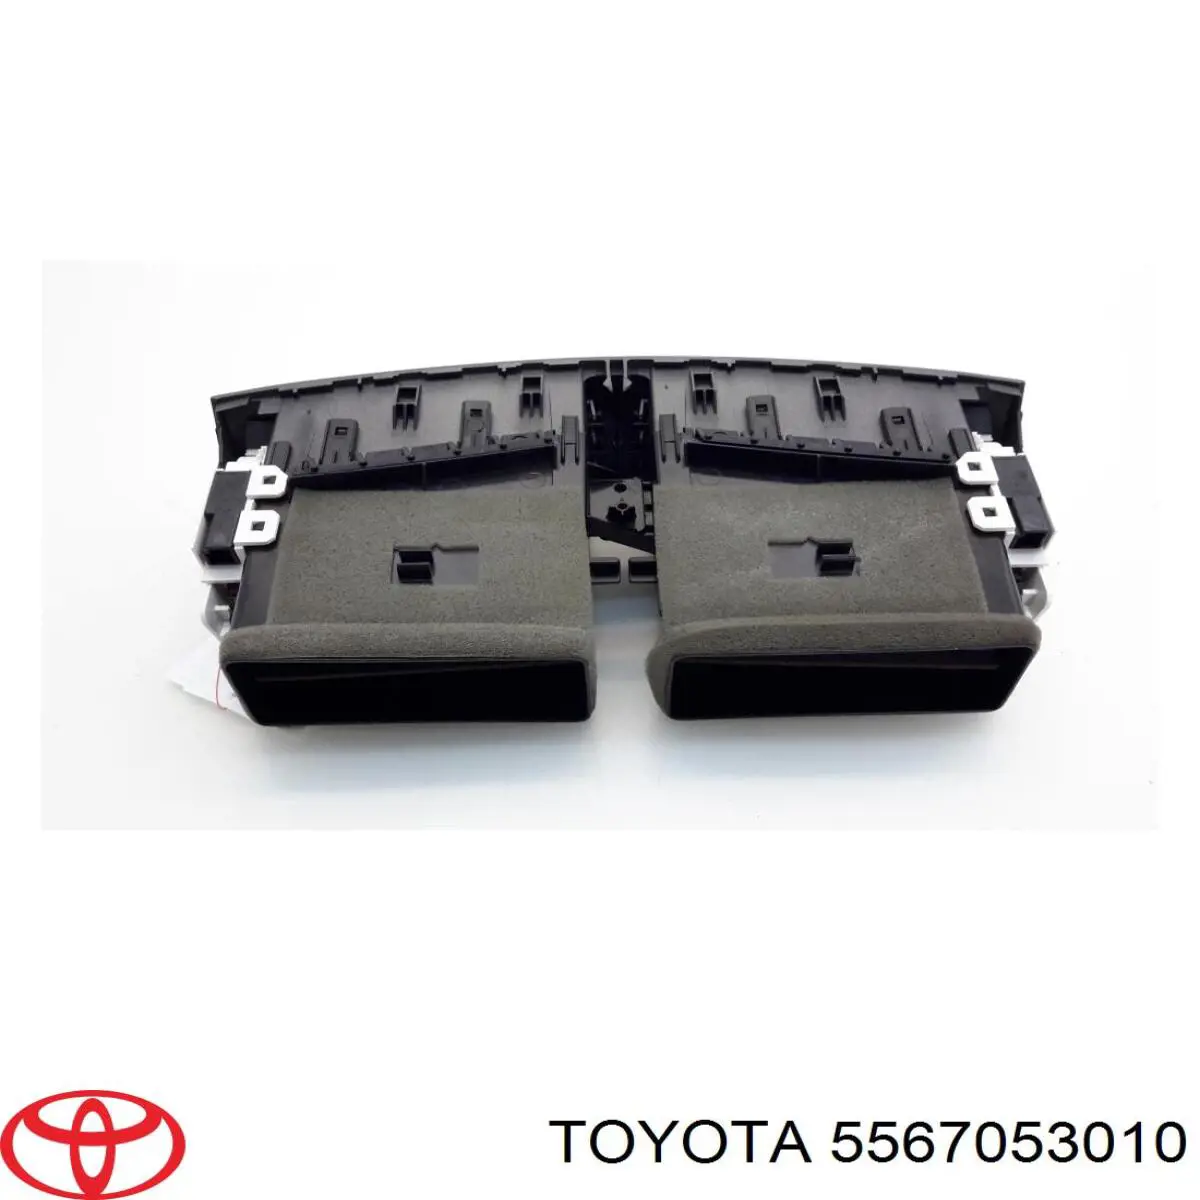 5567053010 Toyota 